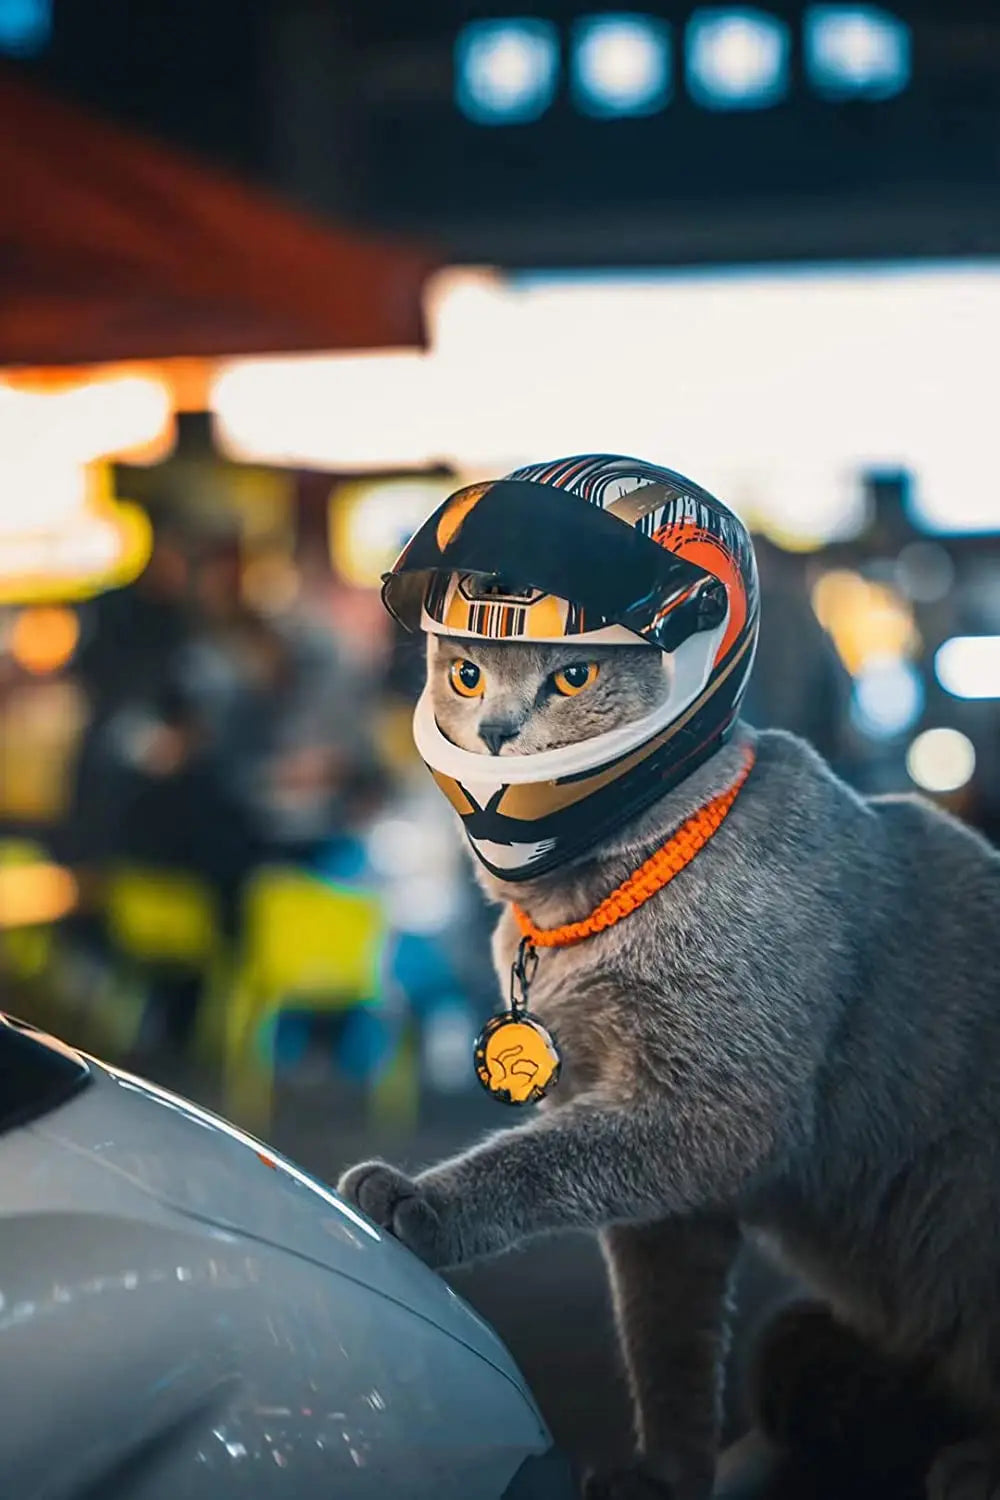 The Cat Motorcycle Helmet